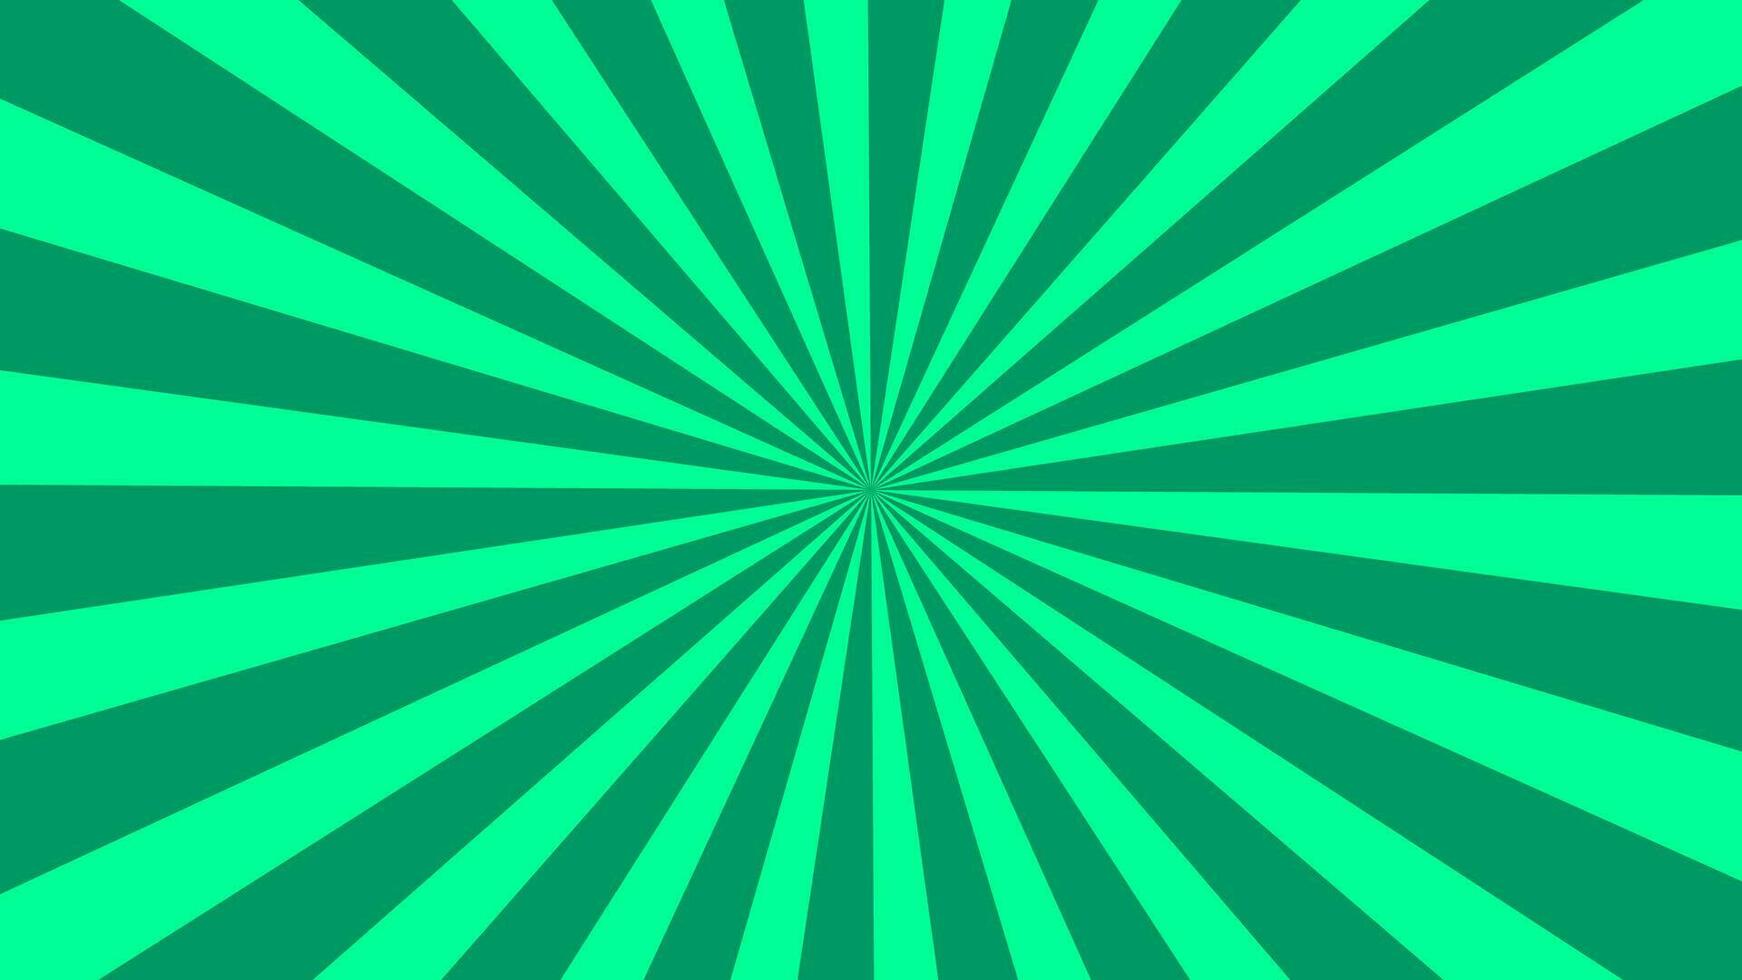 Sunburst Texture Pattern Background Green Tosca vector